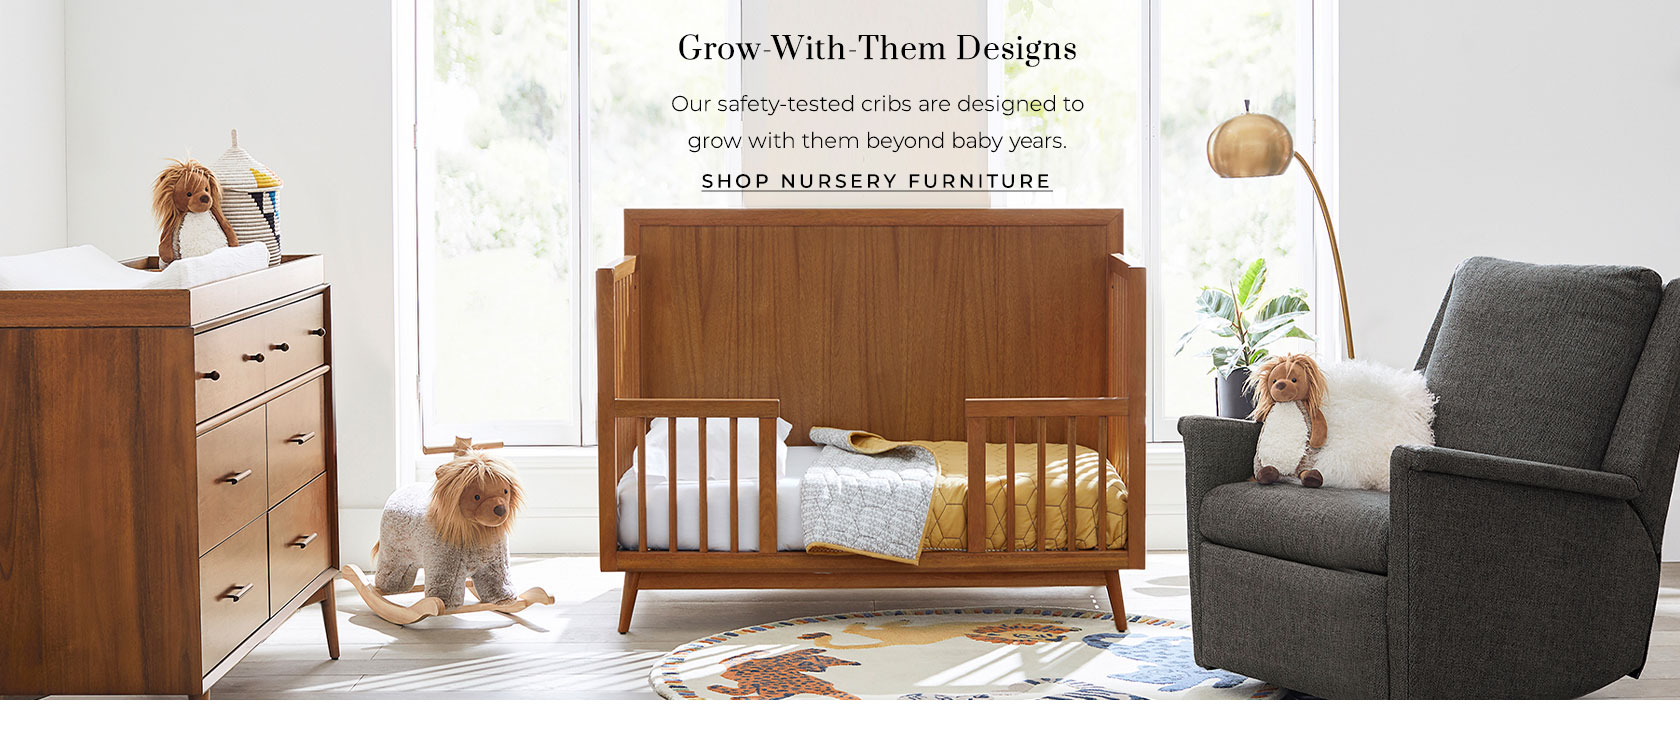 Grow With Them Designs - Shop Nursery Furniture